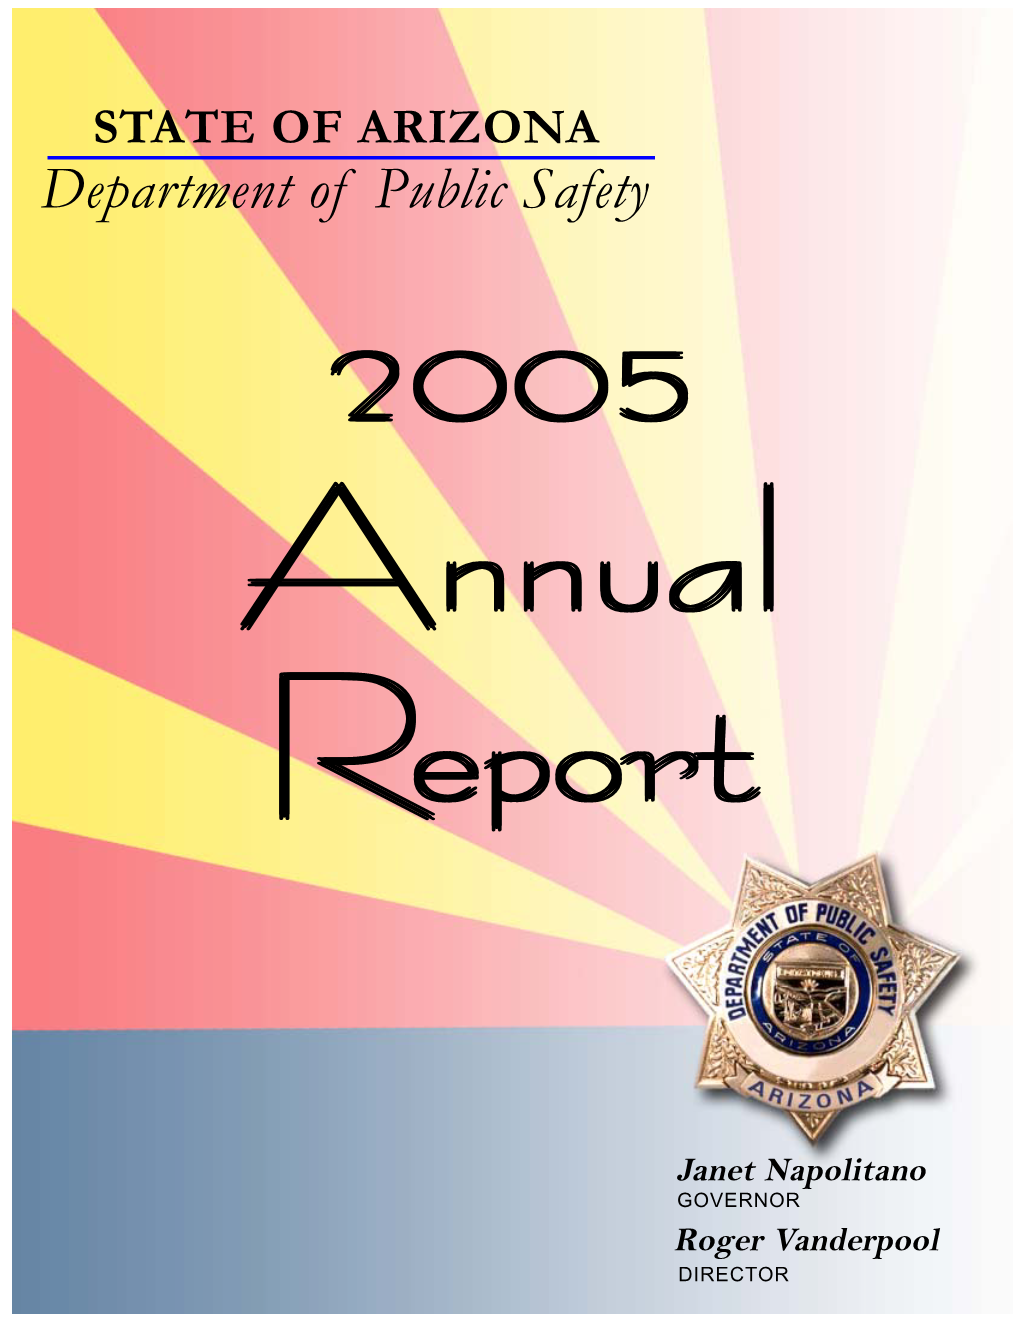 STATE of ARIZONA Department of Public Safety 200520052005 Annualannualannual Rrreporteporteport